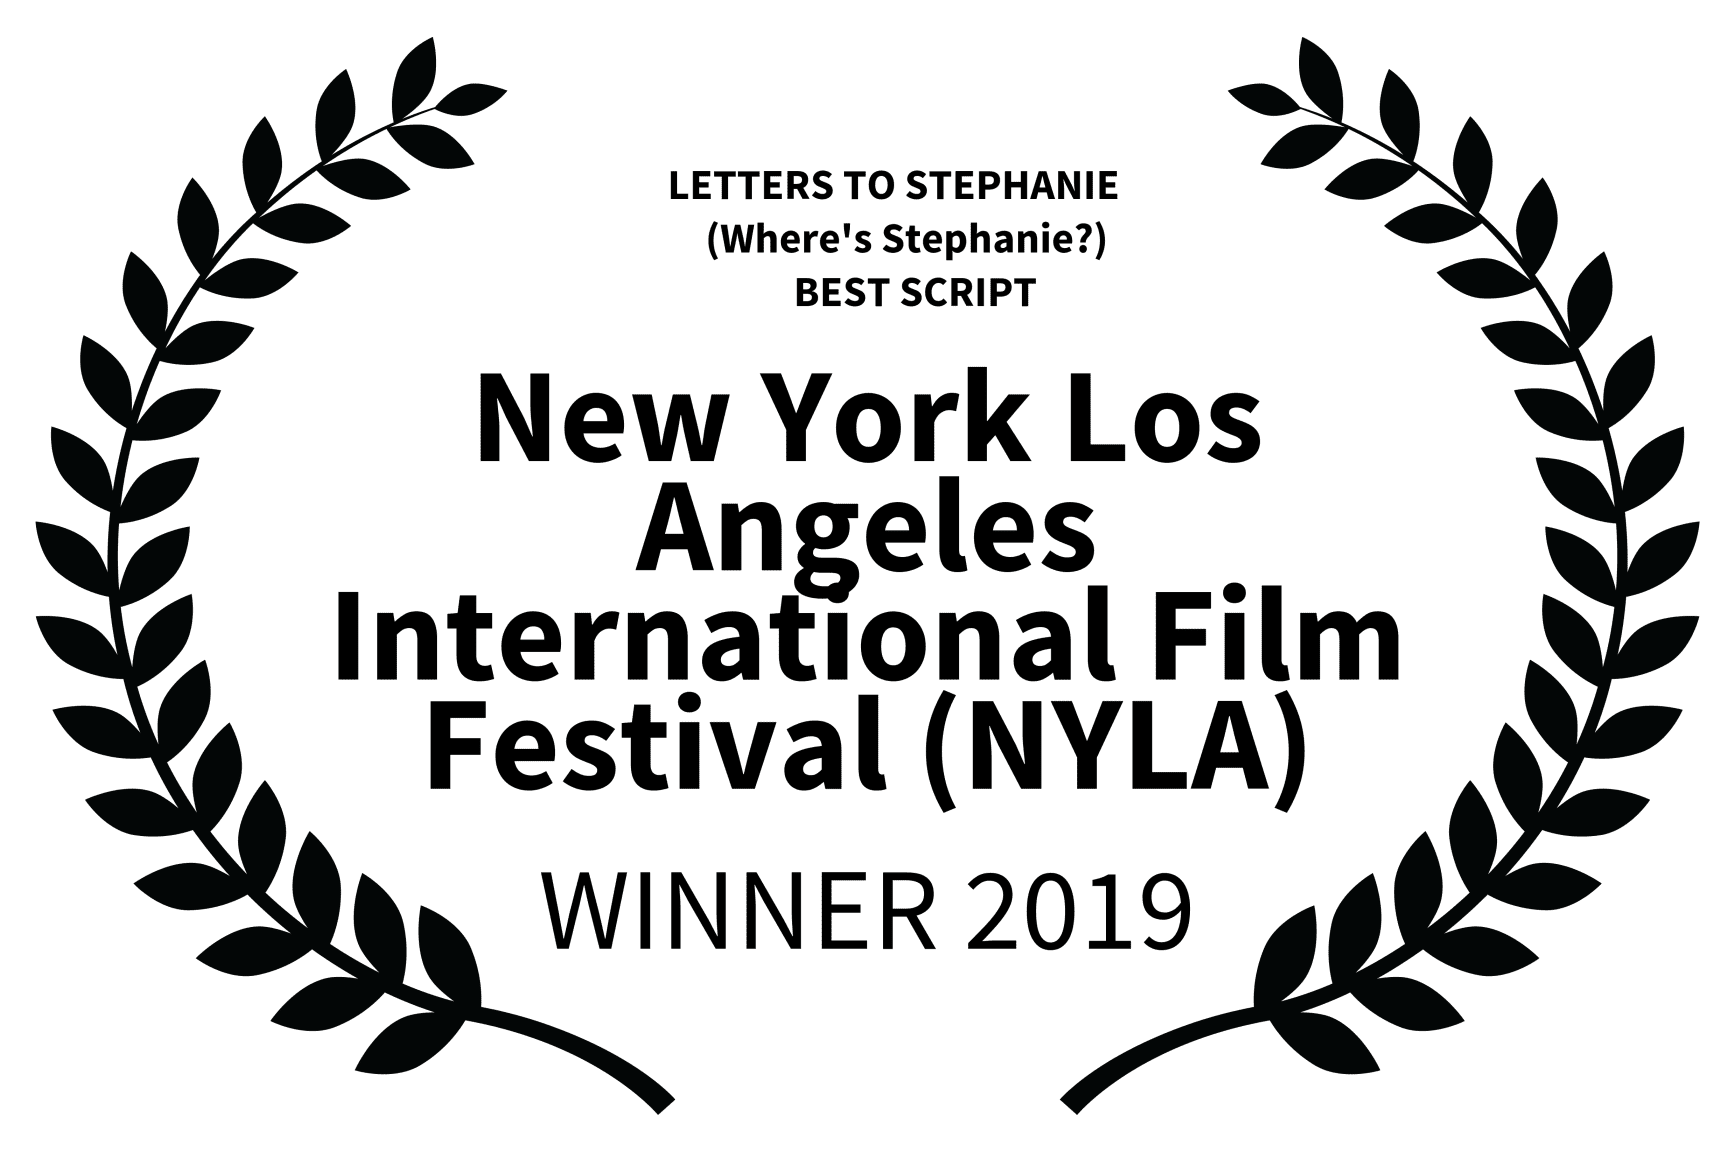 New York Los Angeles International Film Festival winner